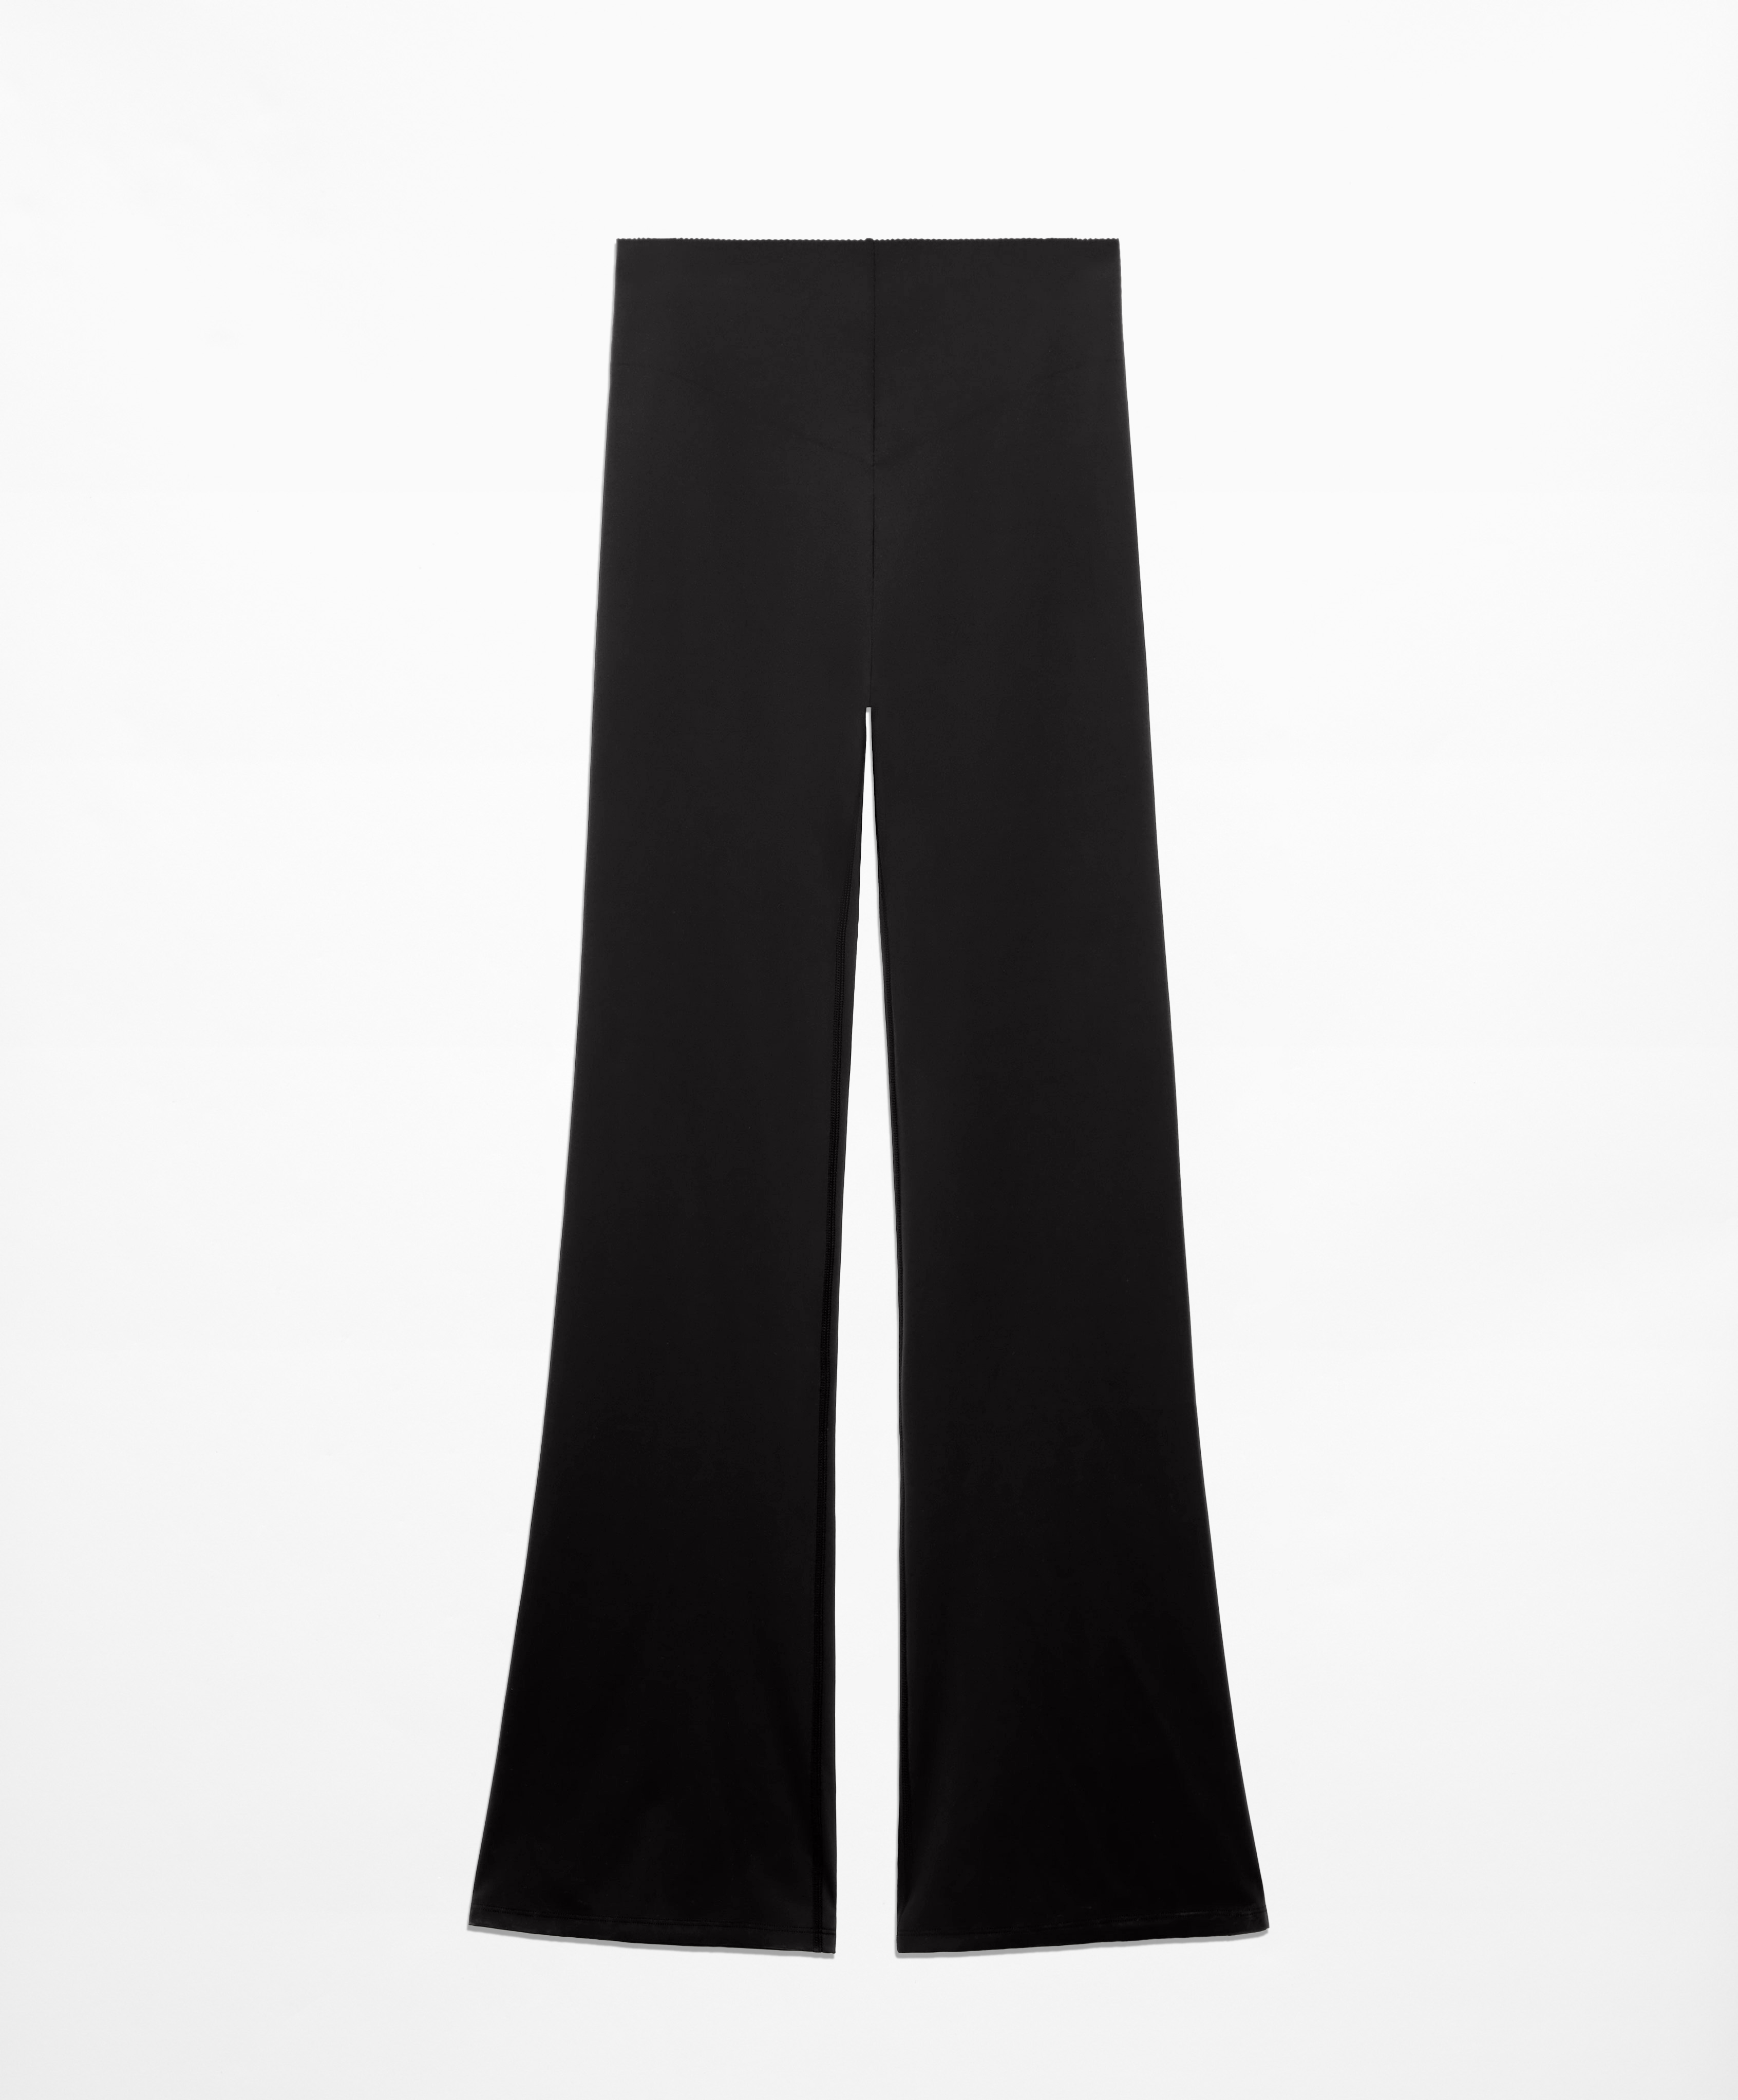 OYSHO RAISE UP COMPRESSIVE FLARE - Trousers - black - Zalando.de